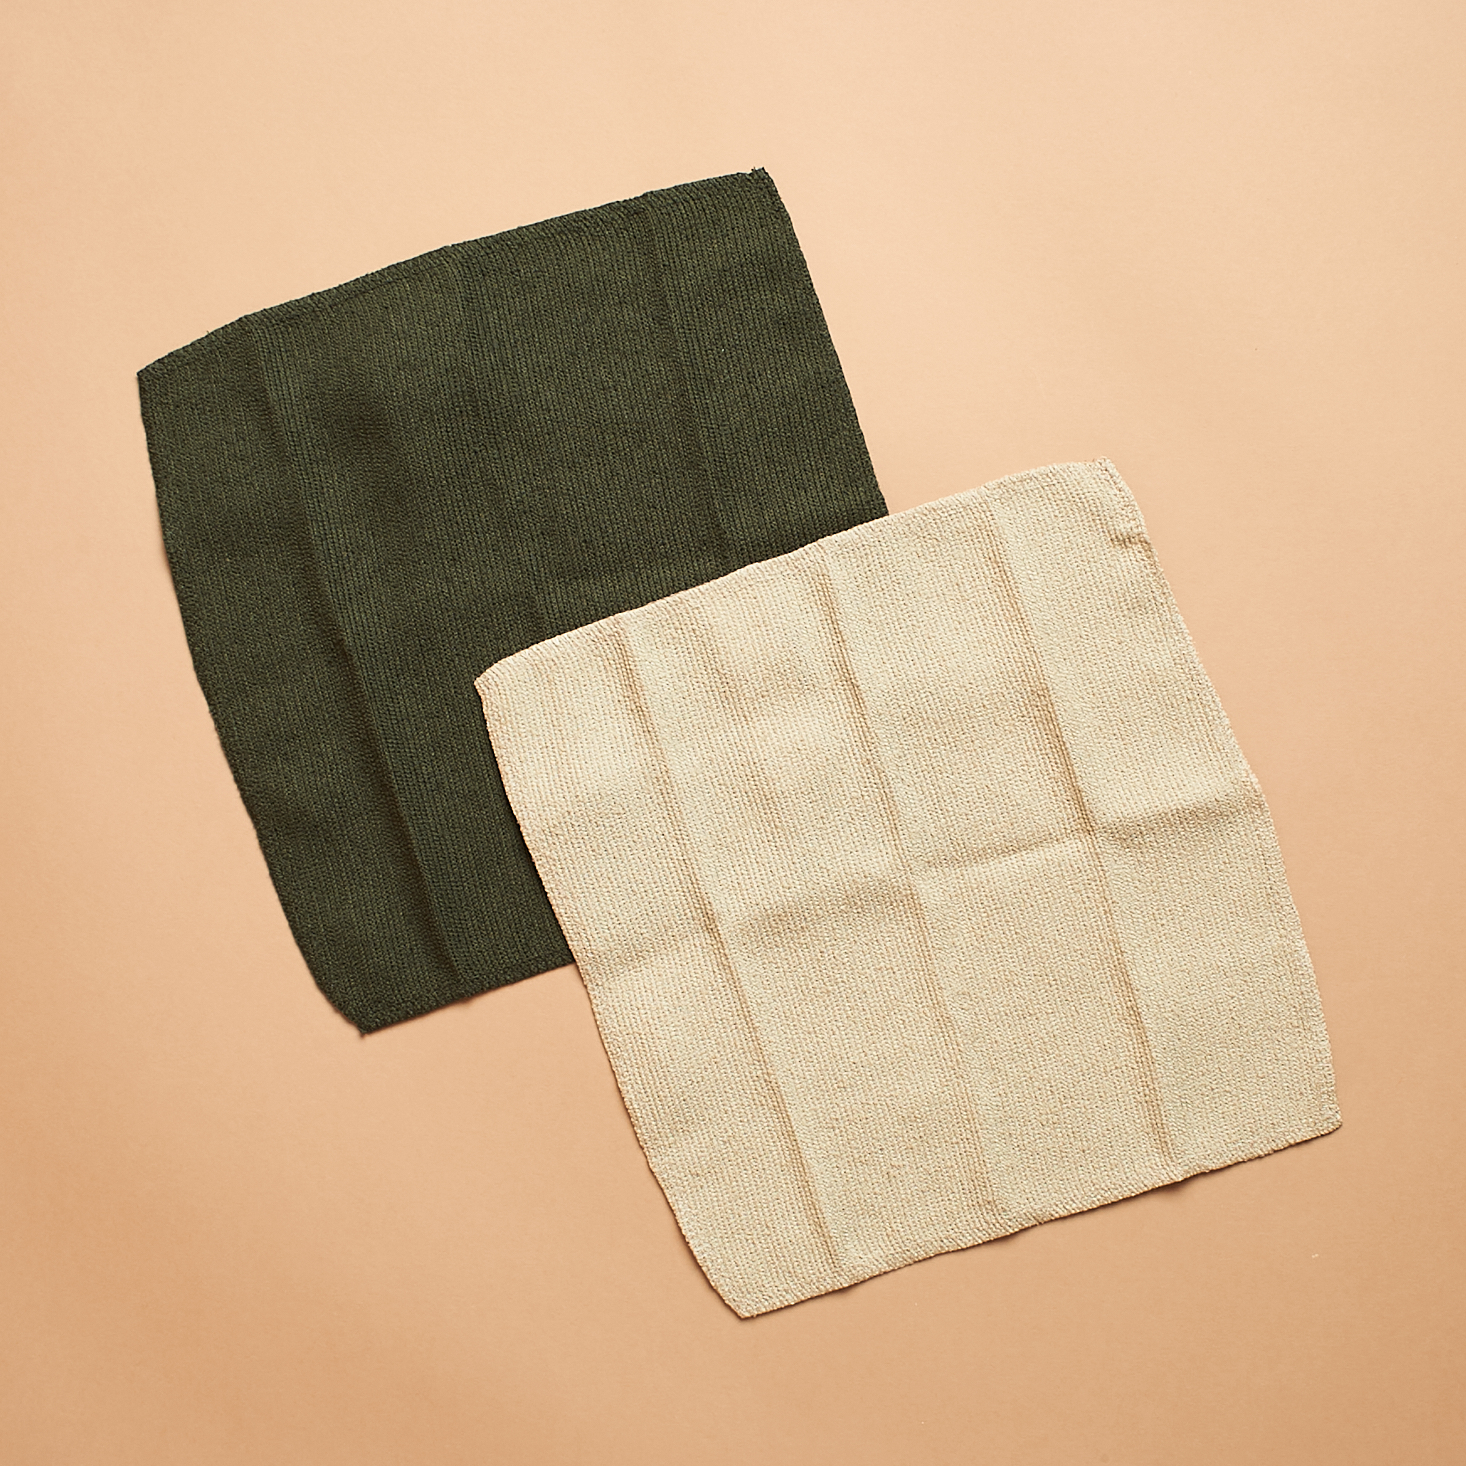 Gear Aid micro-terry washcloth kit